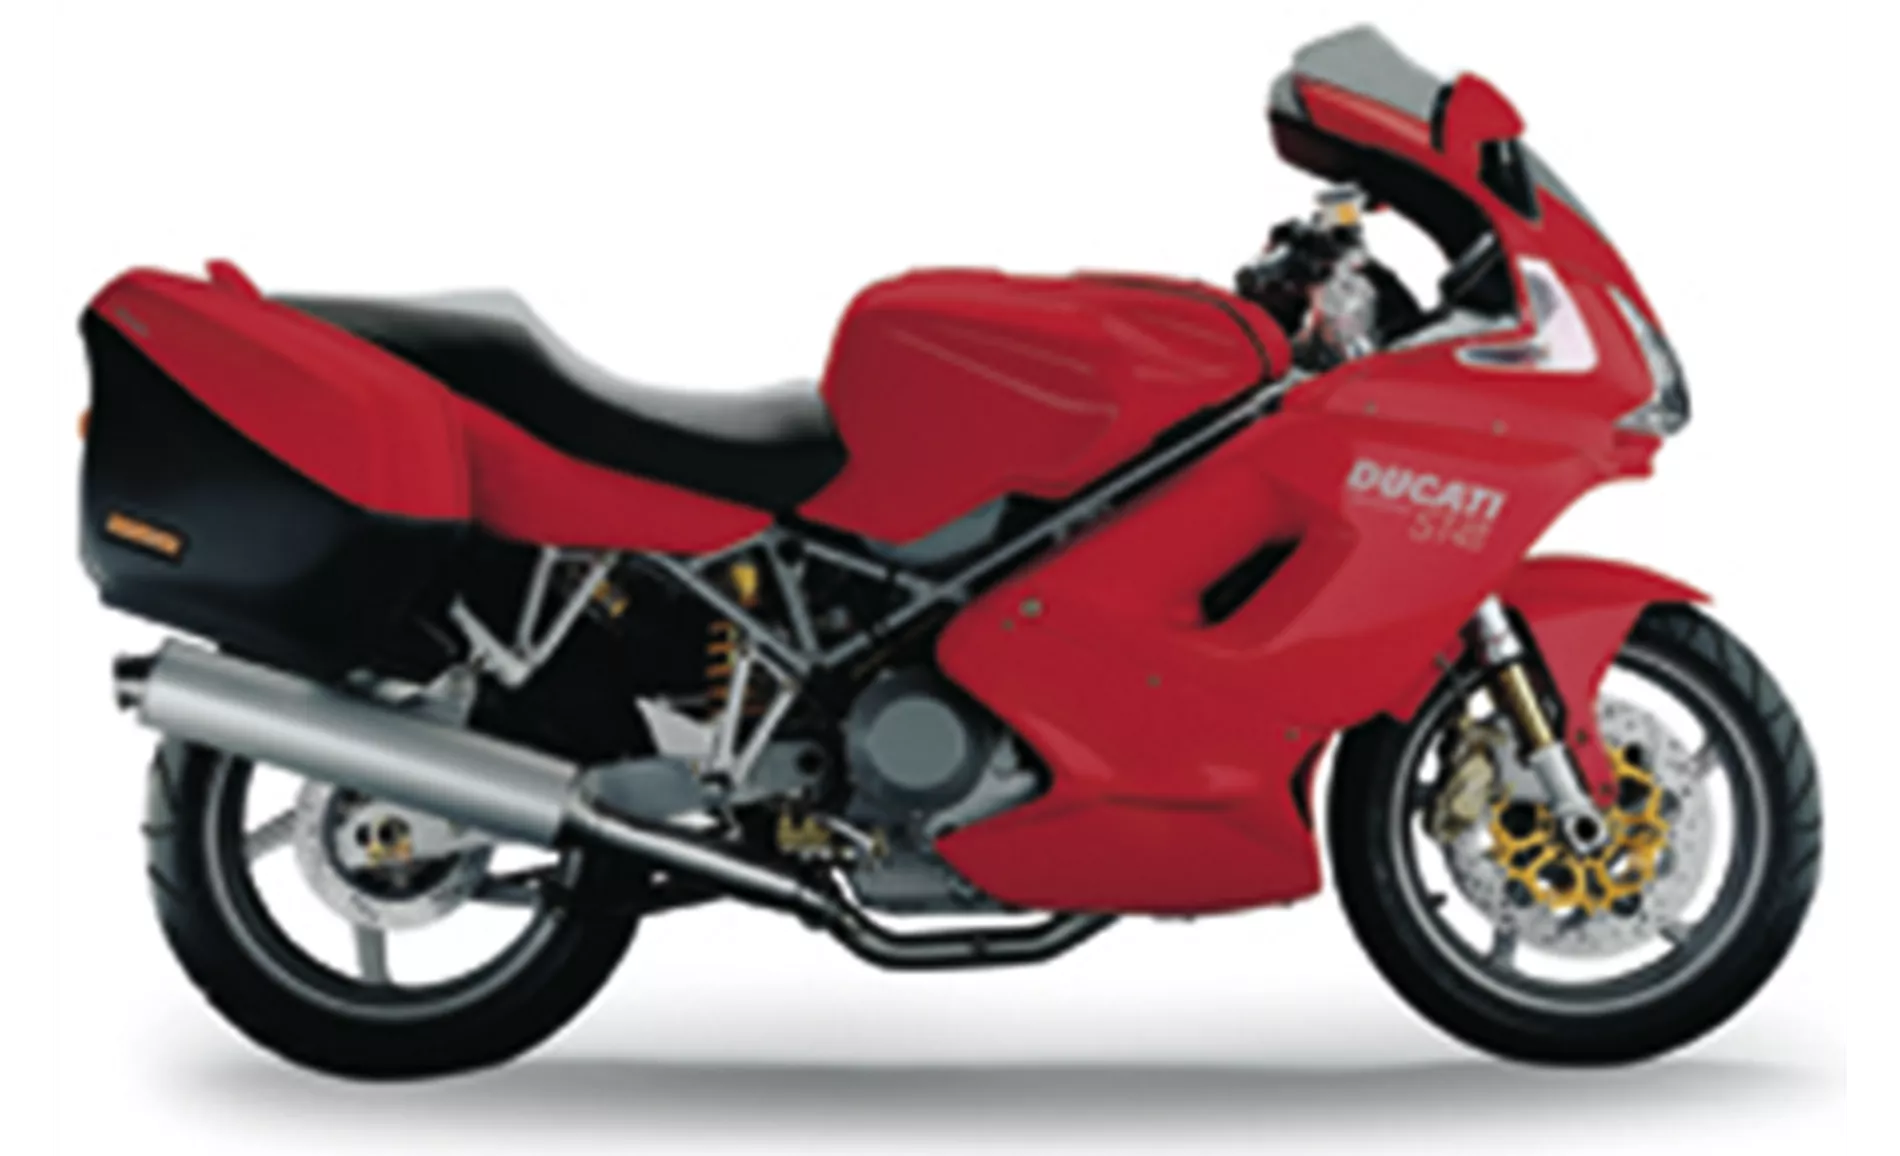 Ducati ST 4 S 2005